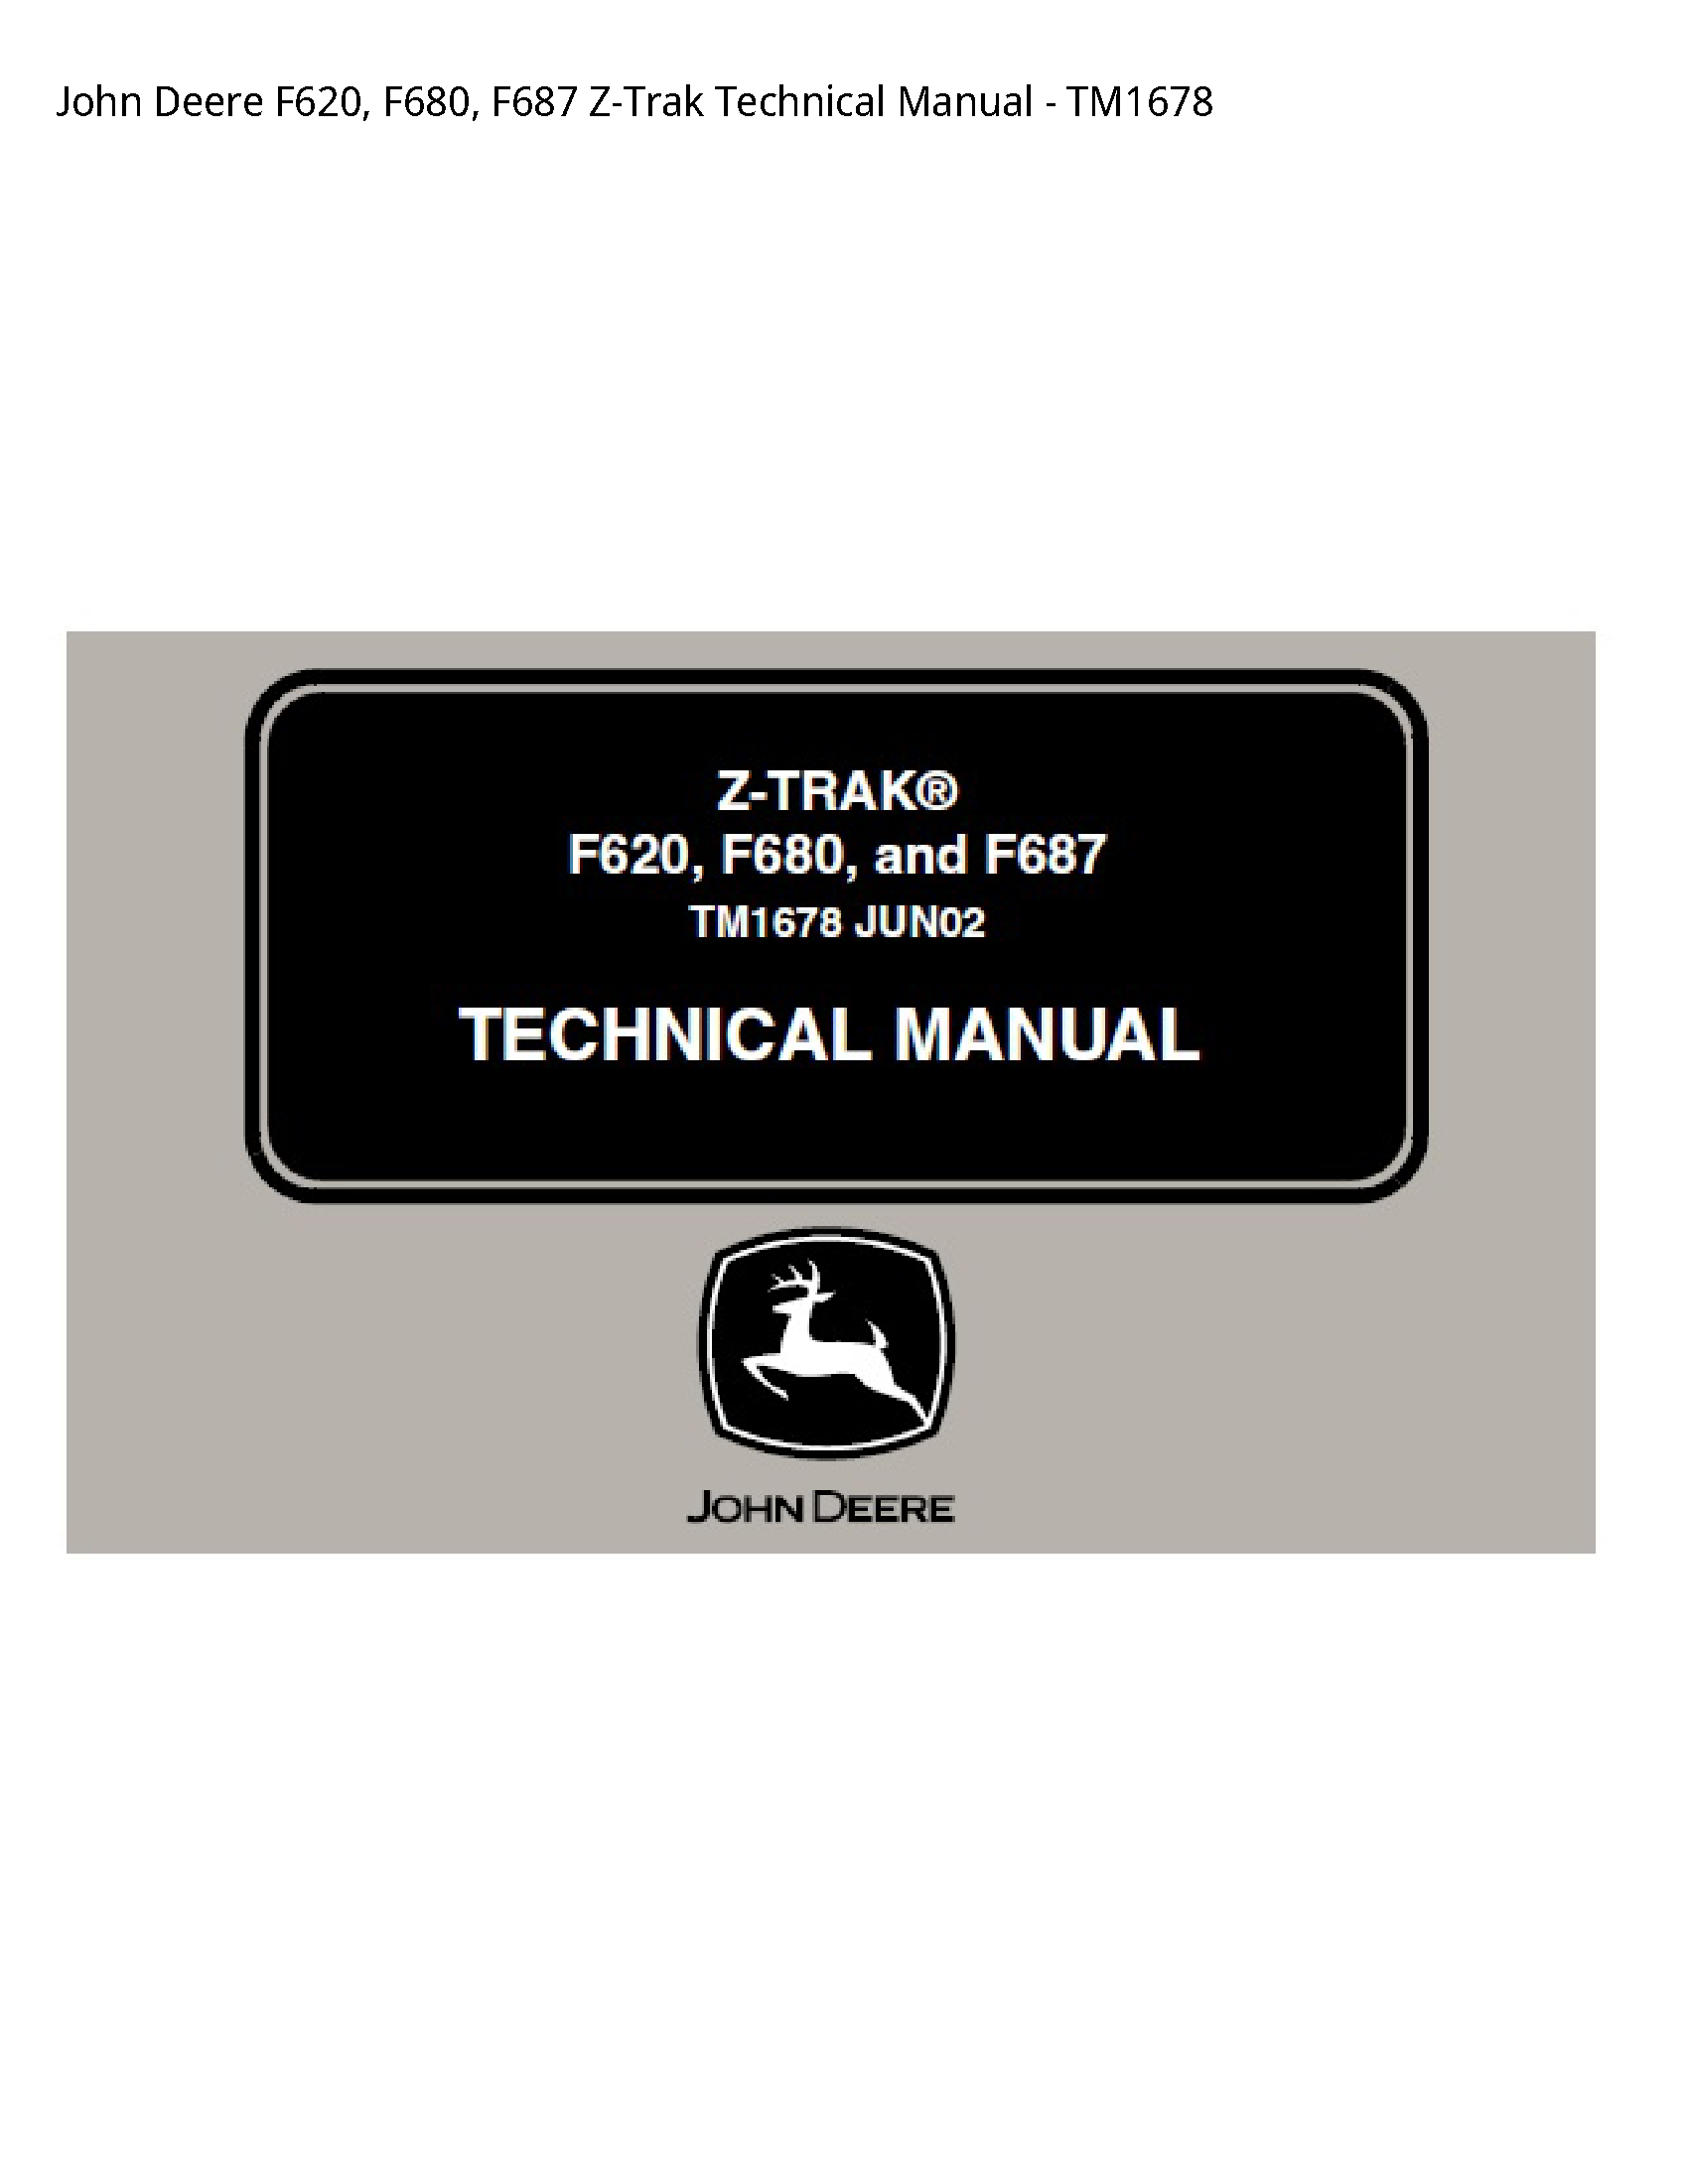 John Deere F620 Z-Trak Technical manual